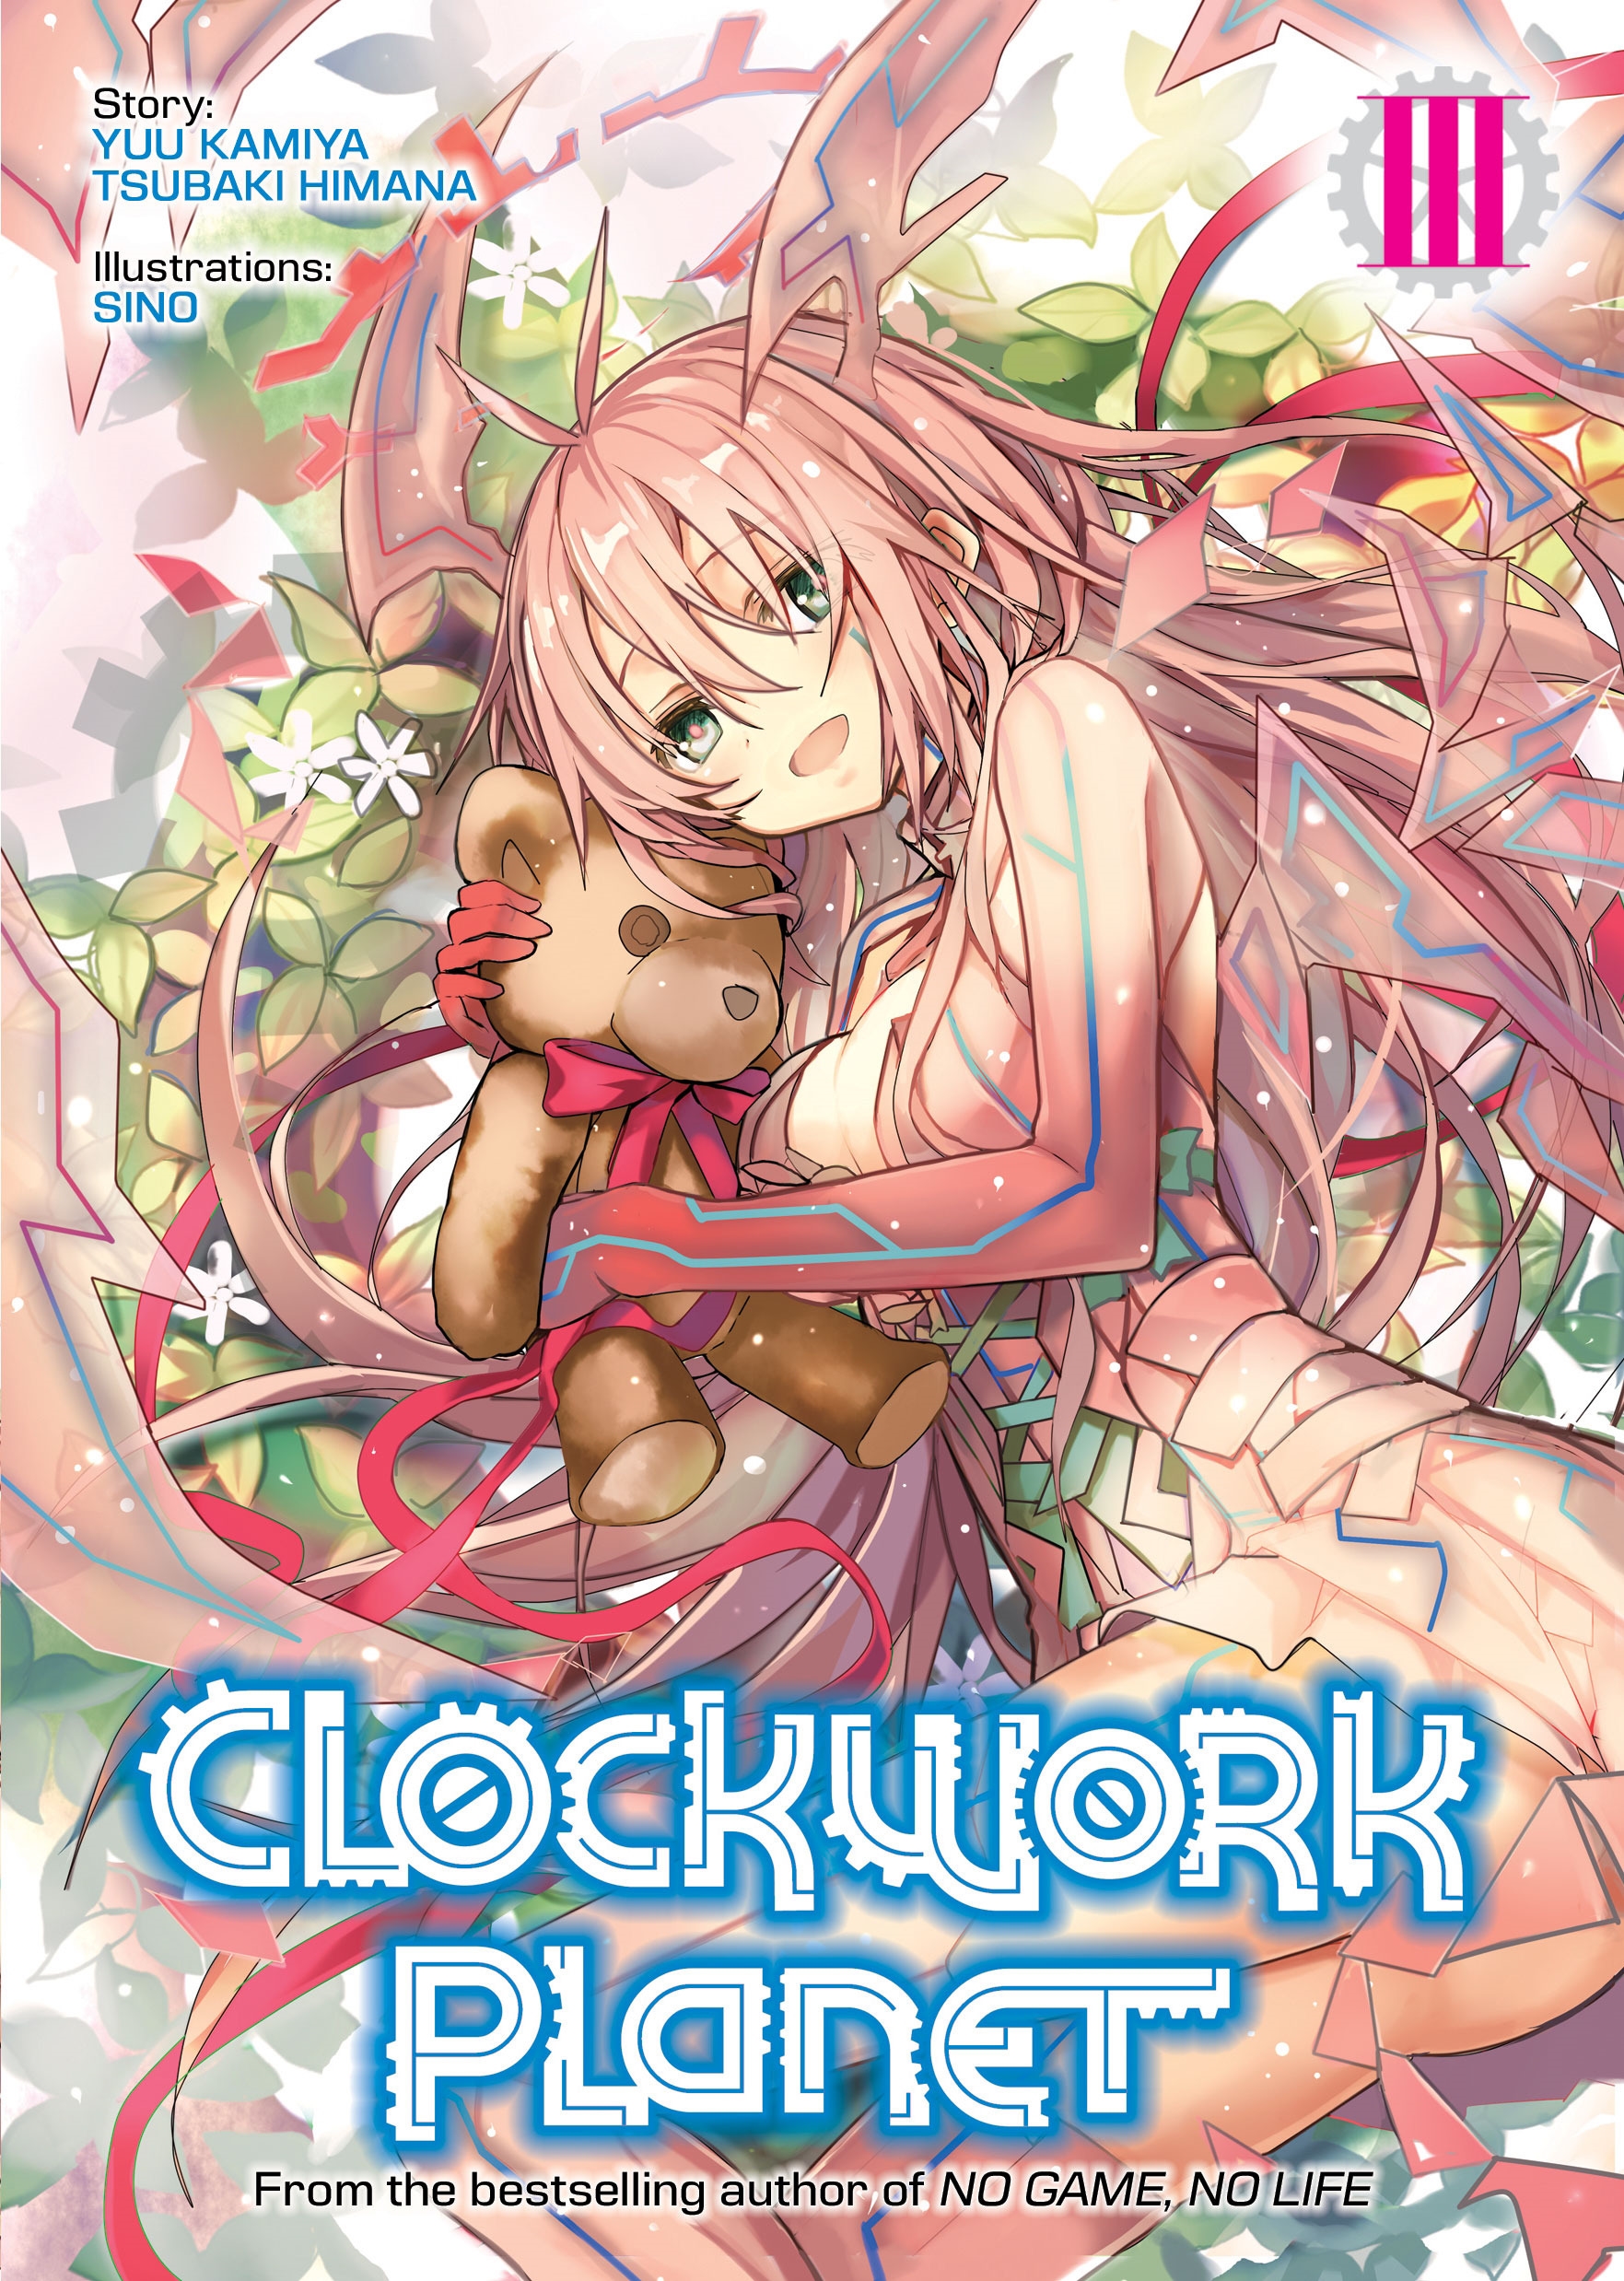 7 Clockwork Planet ideas  clockwork, manga anime, anime girl